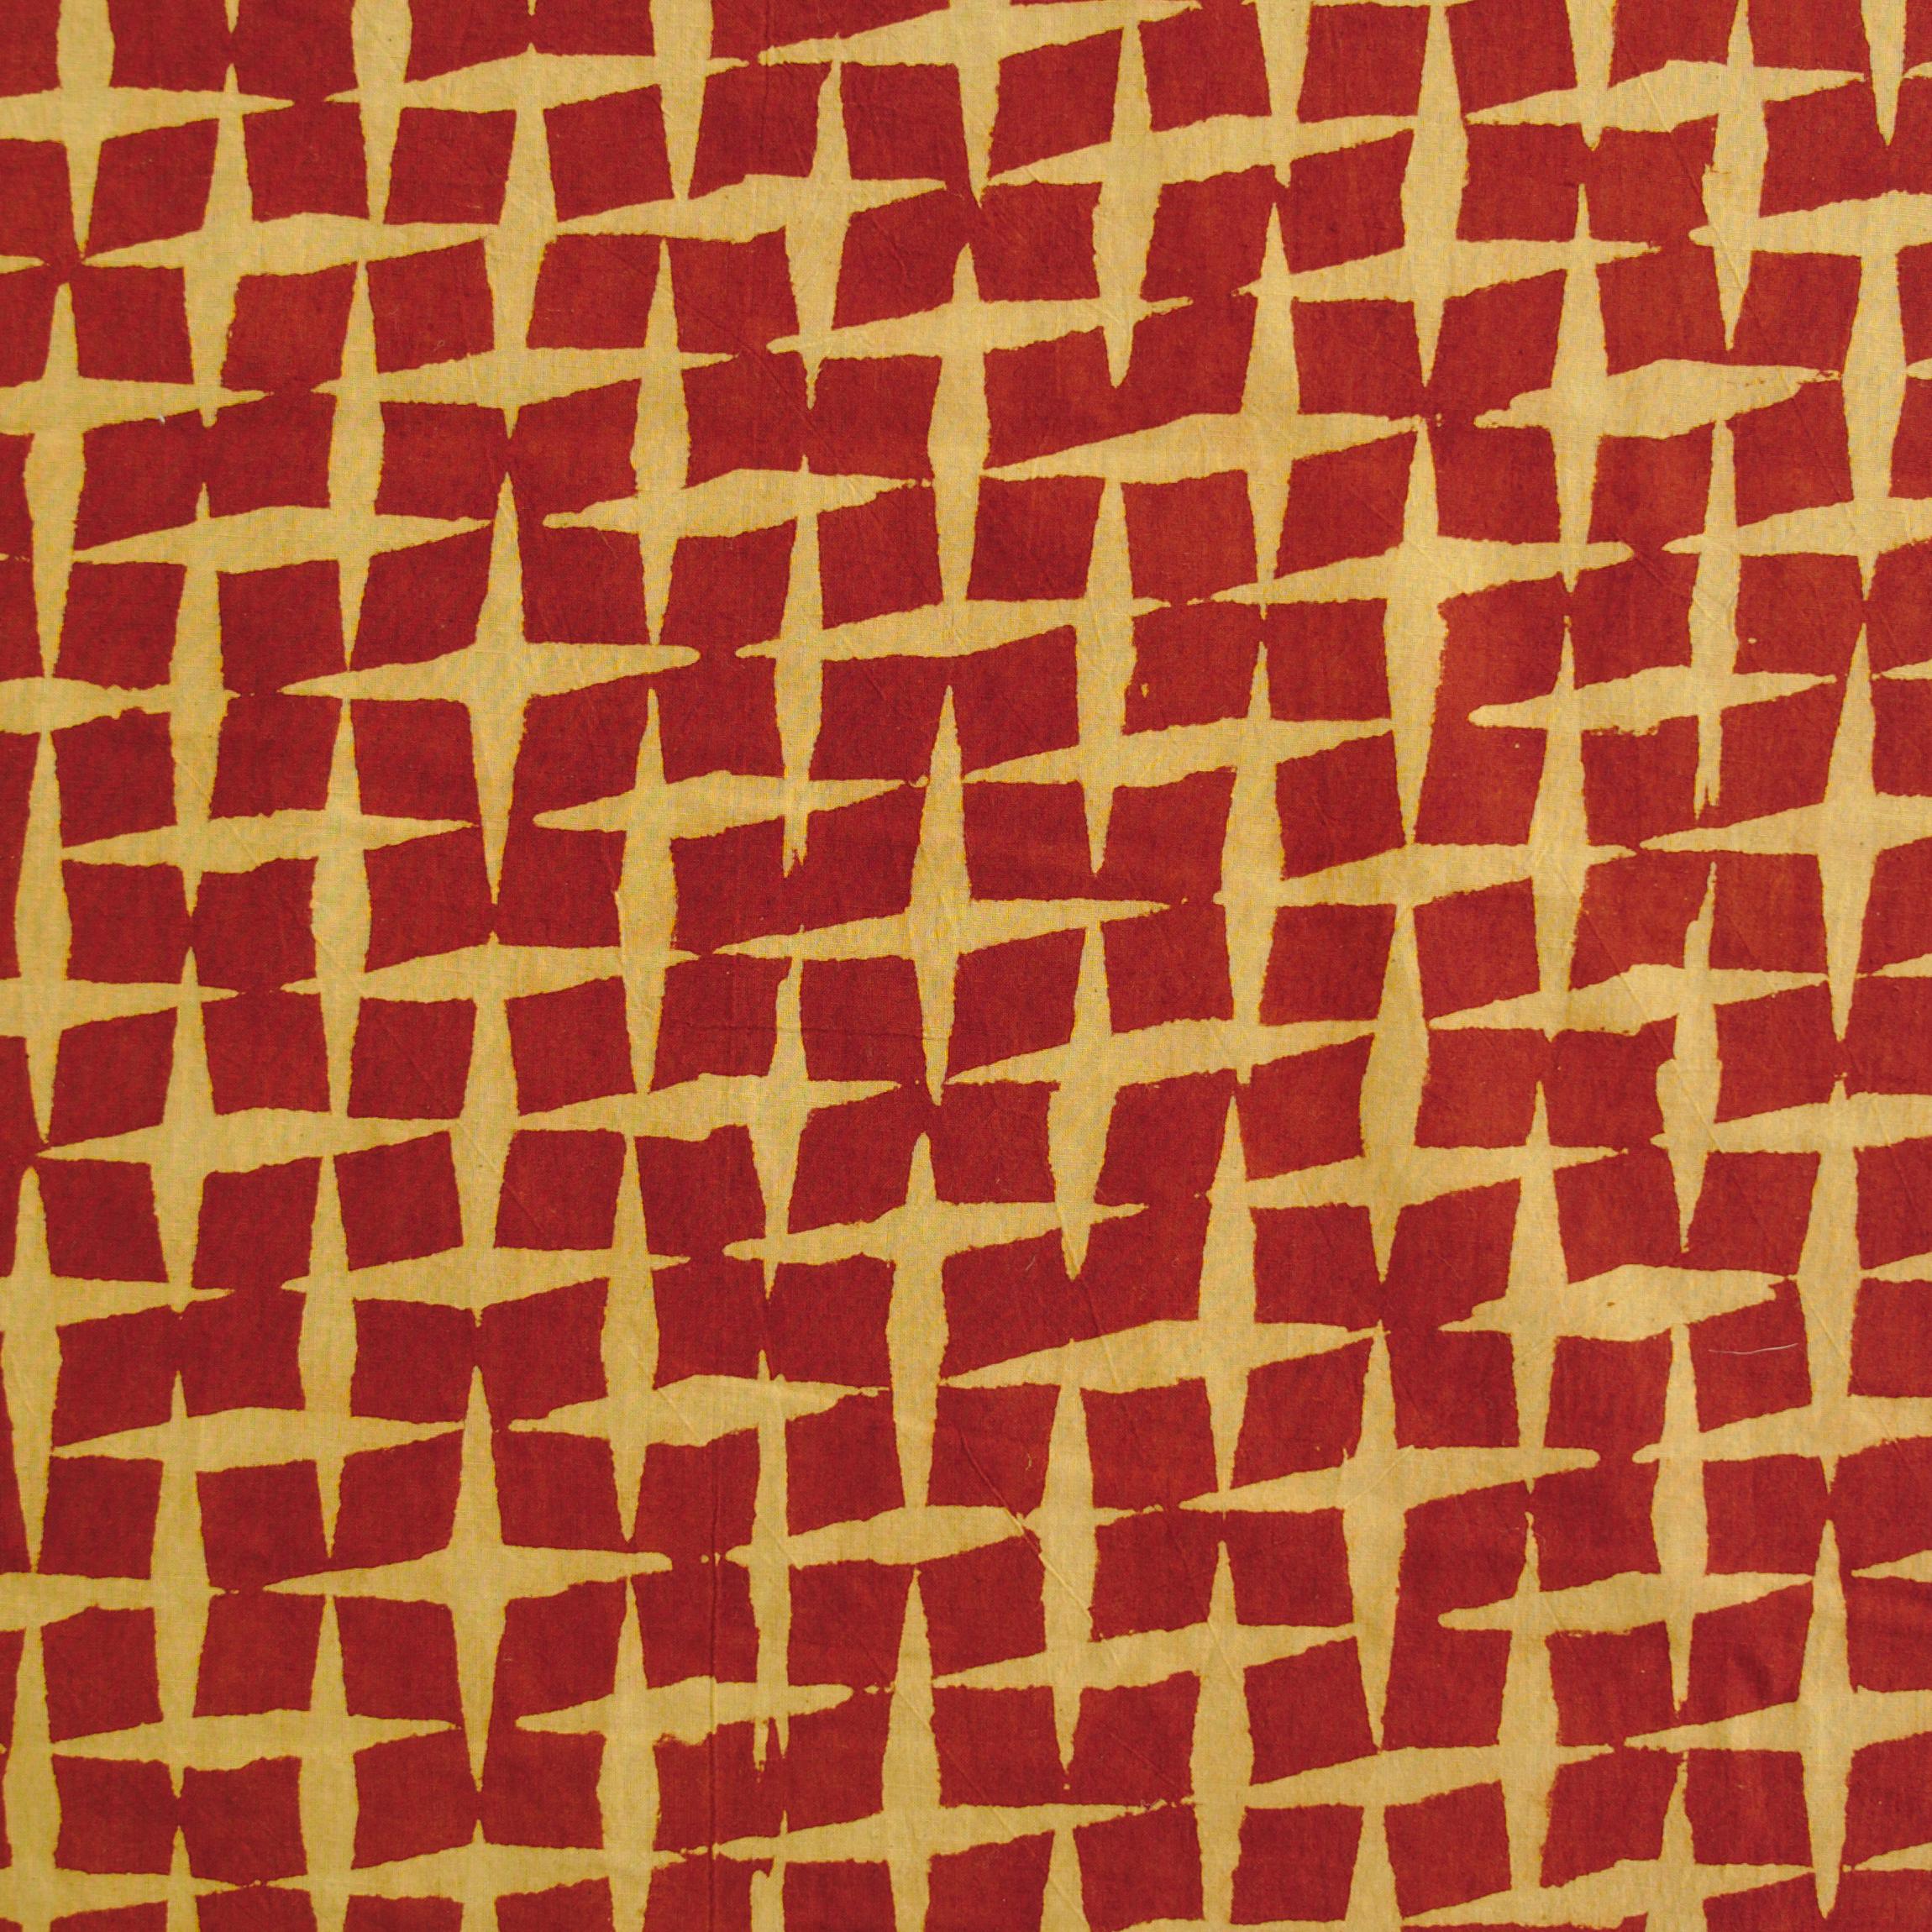 100% Block-Printed Cotton Fabric from India - Ajrak - Alizarin Maroon Crosses, Turmeric Yellow Spray Print - Ruler